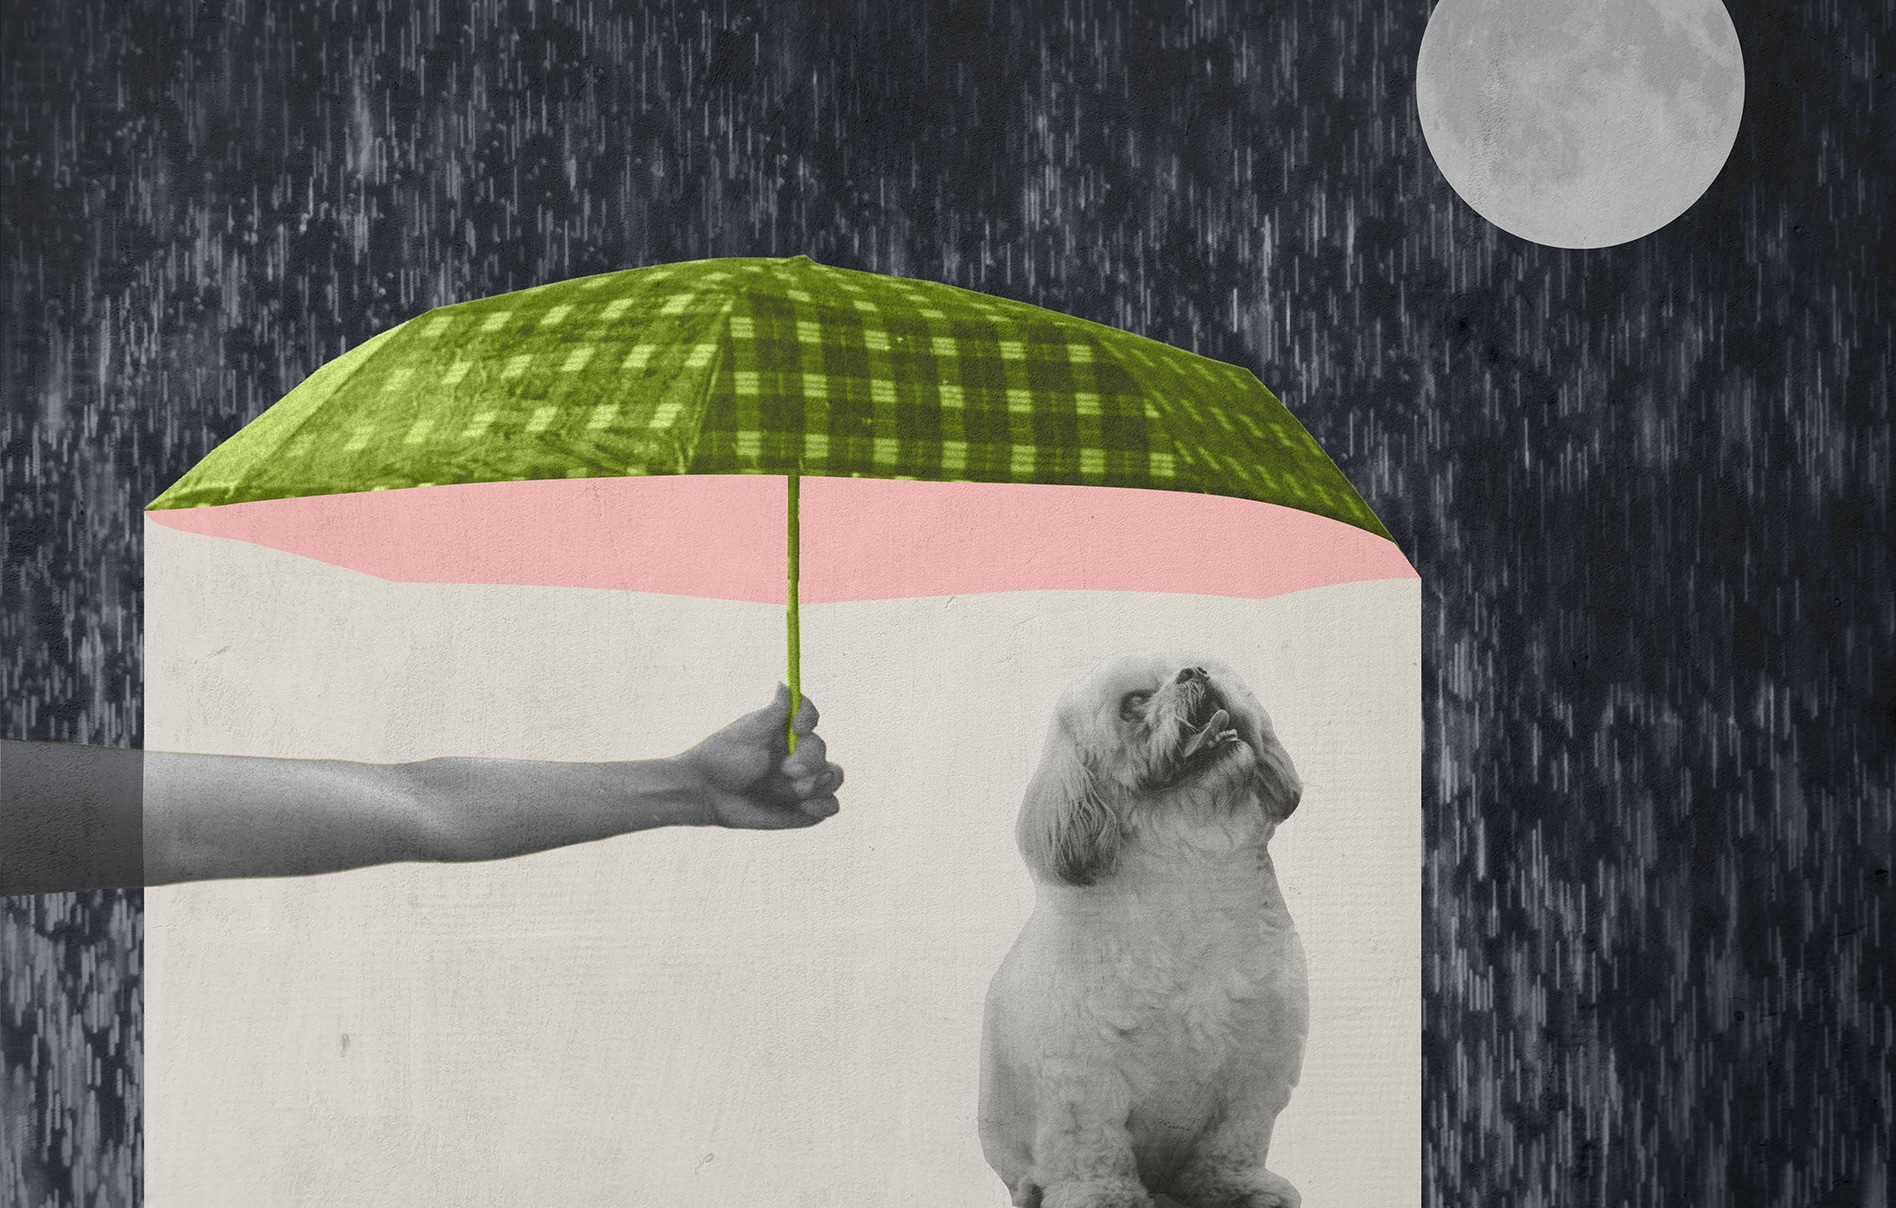 A happy white dog stays dry under an umbrella on a rainy moonlit night.